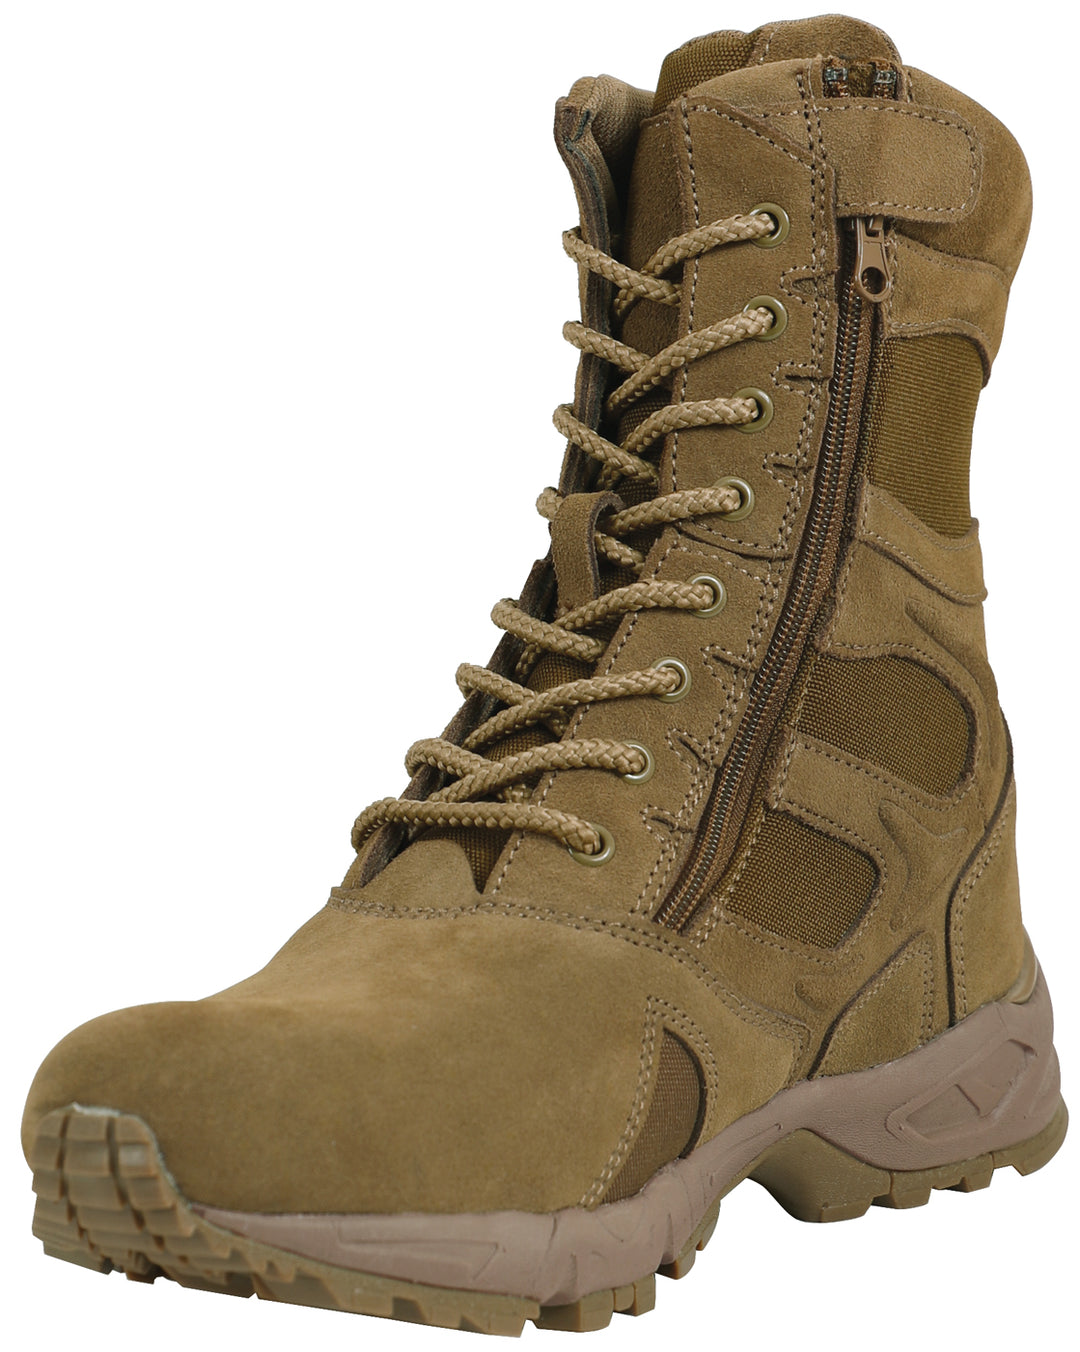 Tactical Boots – Legendary USA